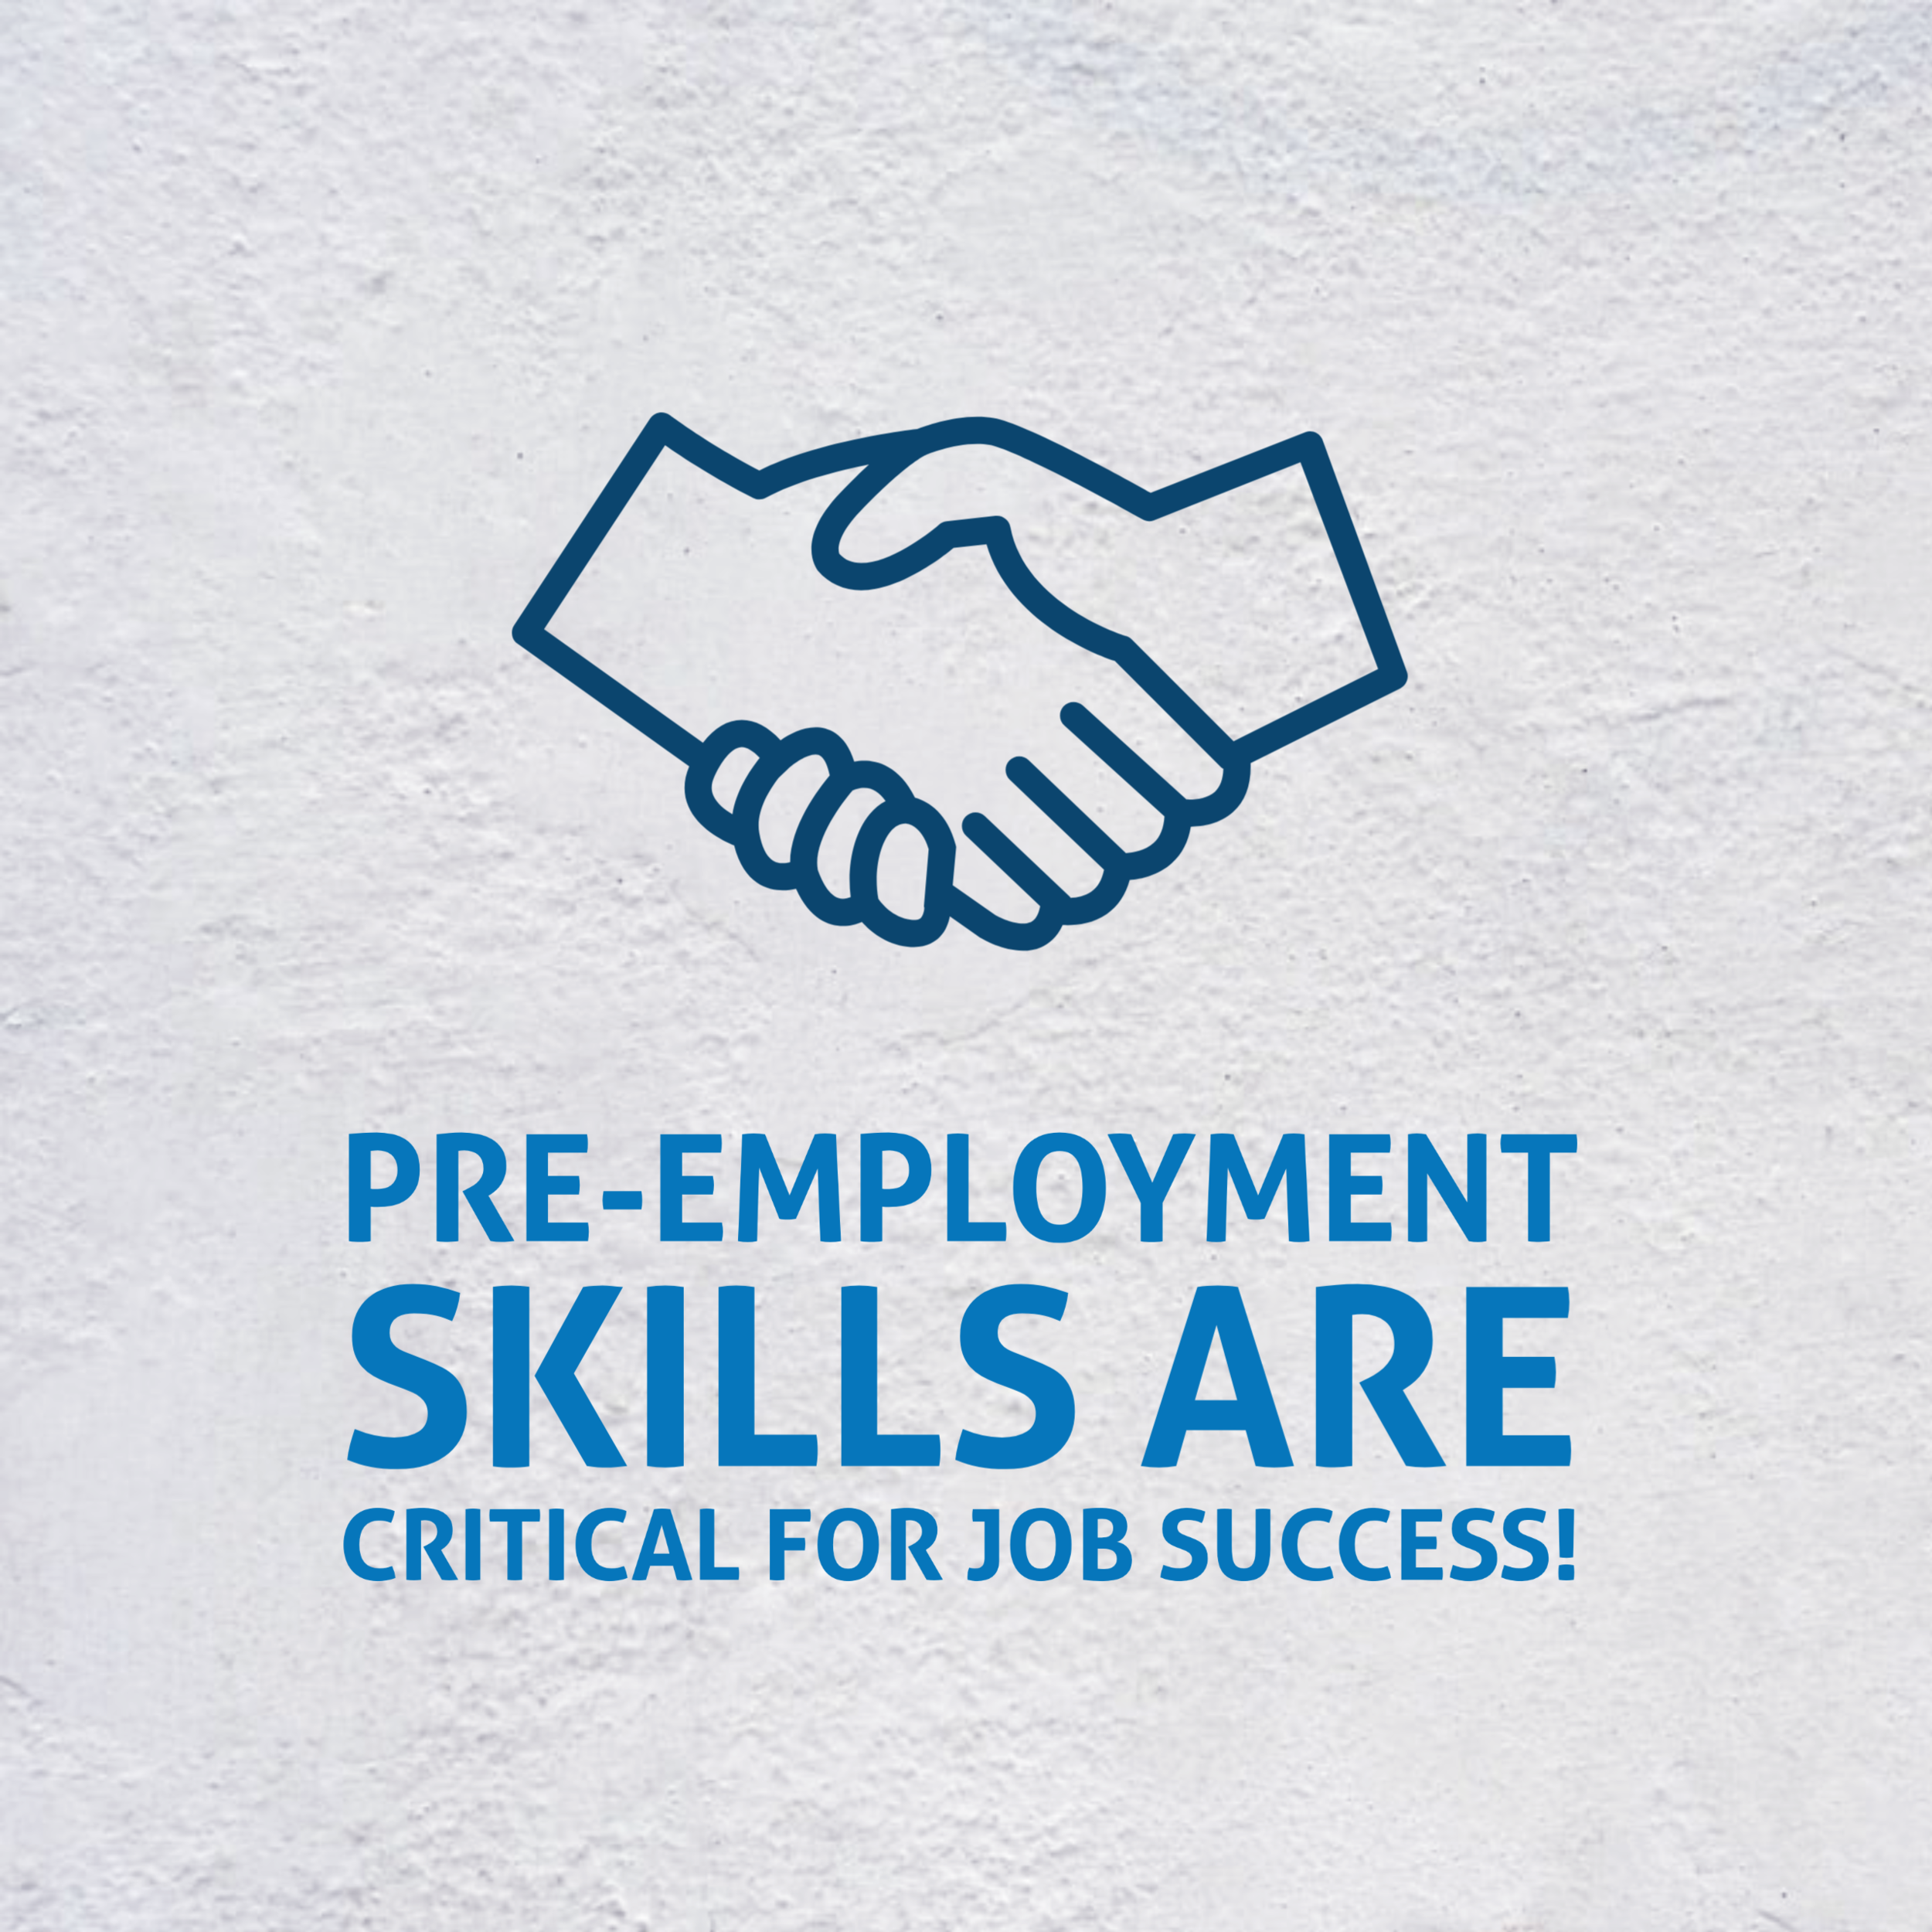 Pre-employment skills are critical for job success!